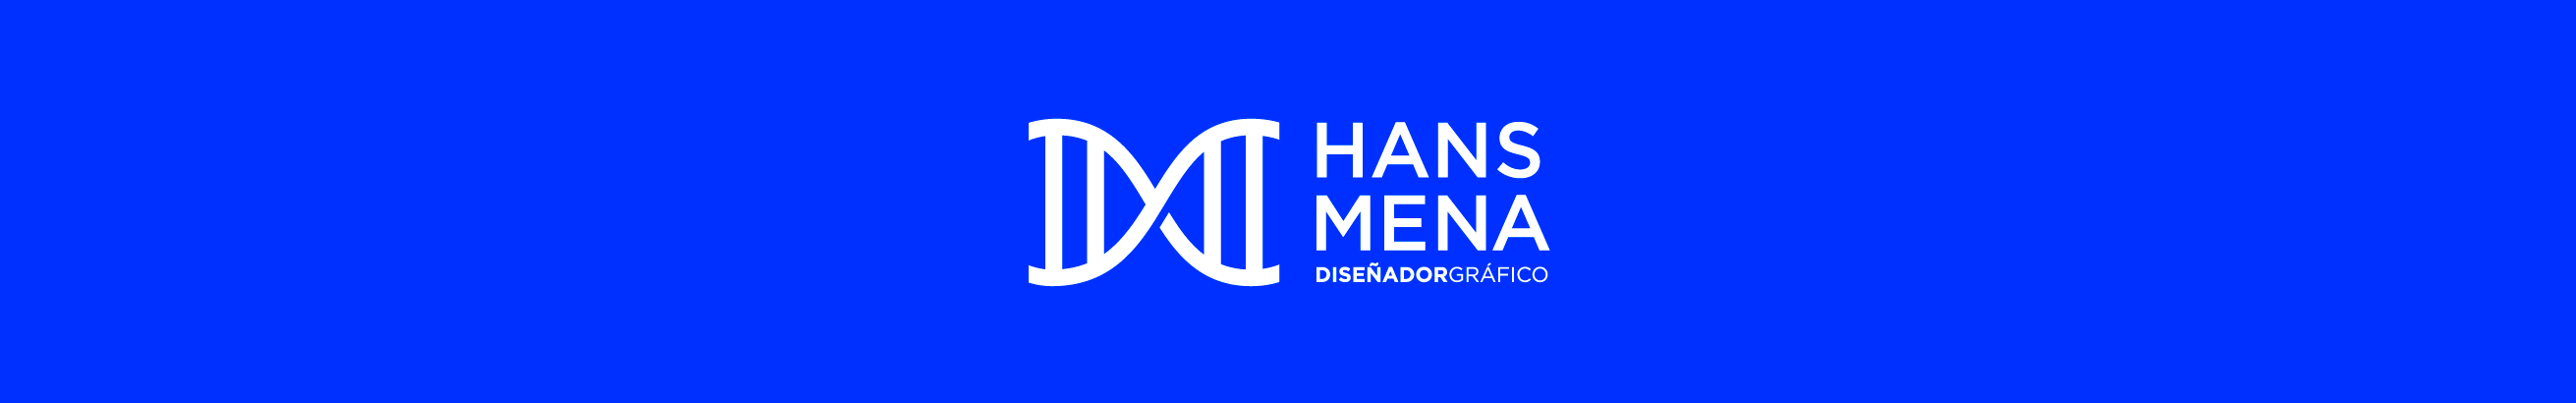 Hans Mena's profile banner